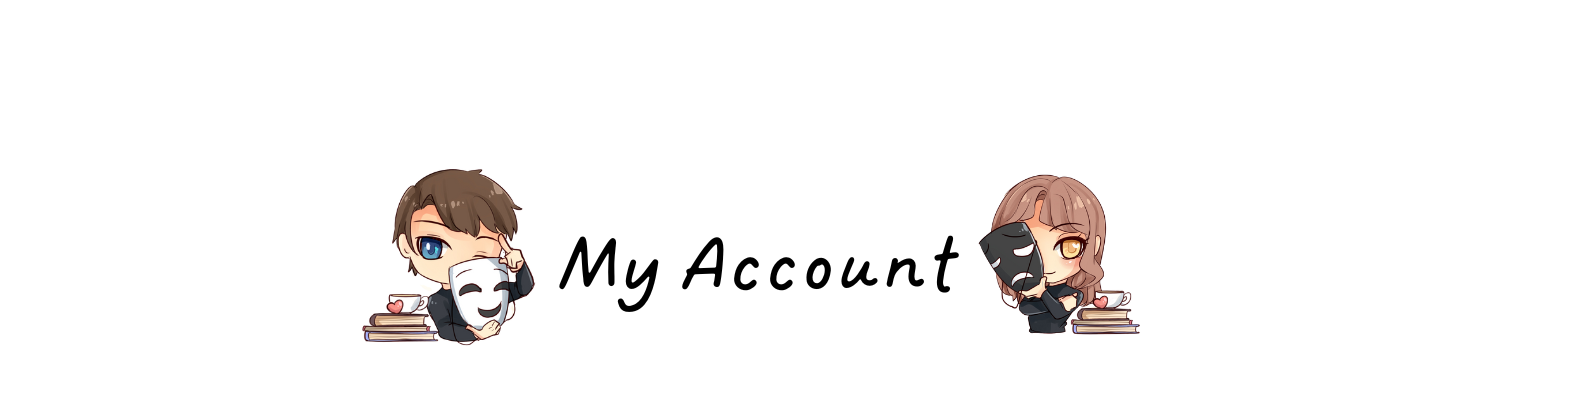 my account